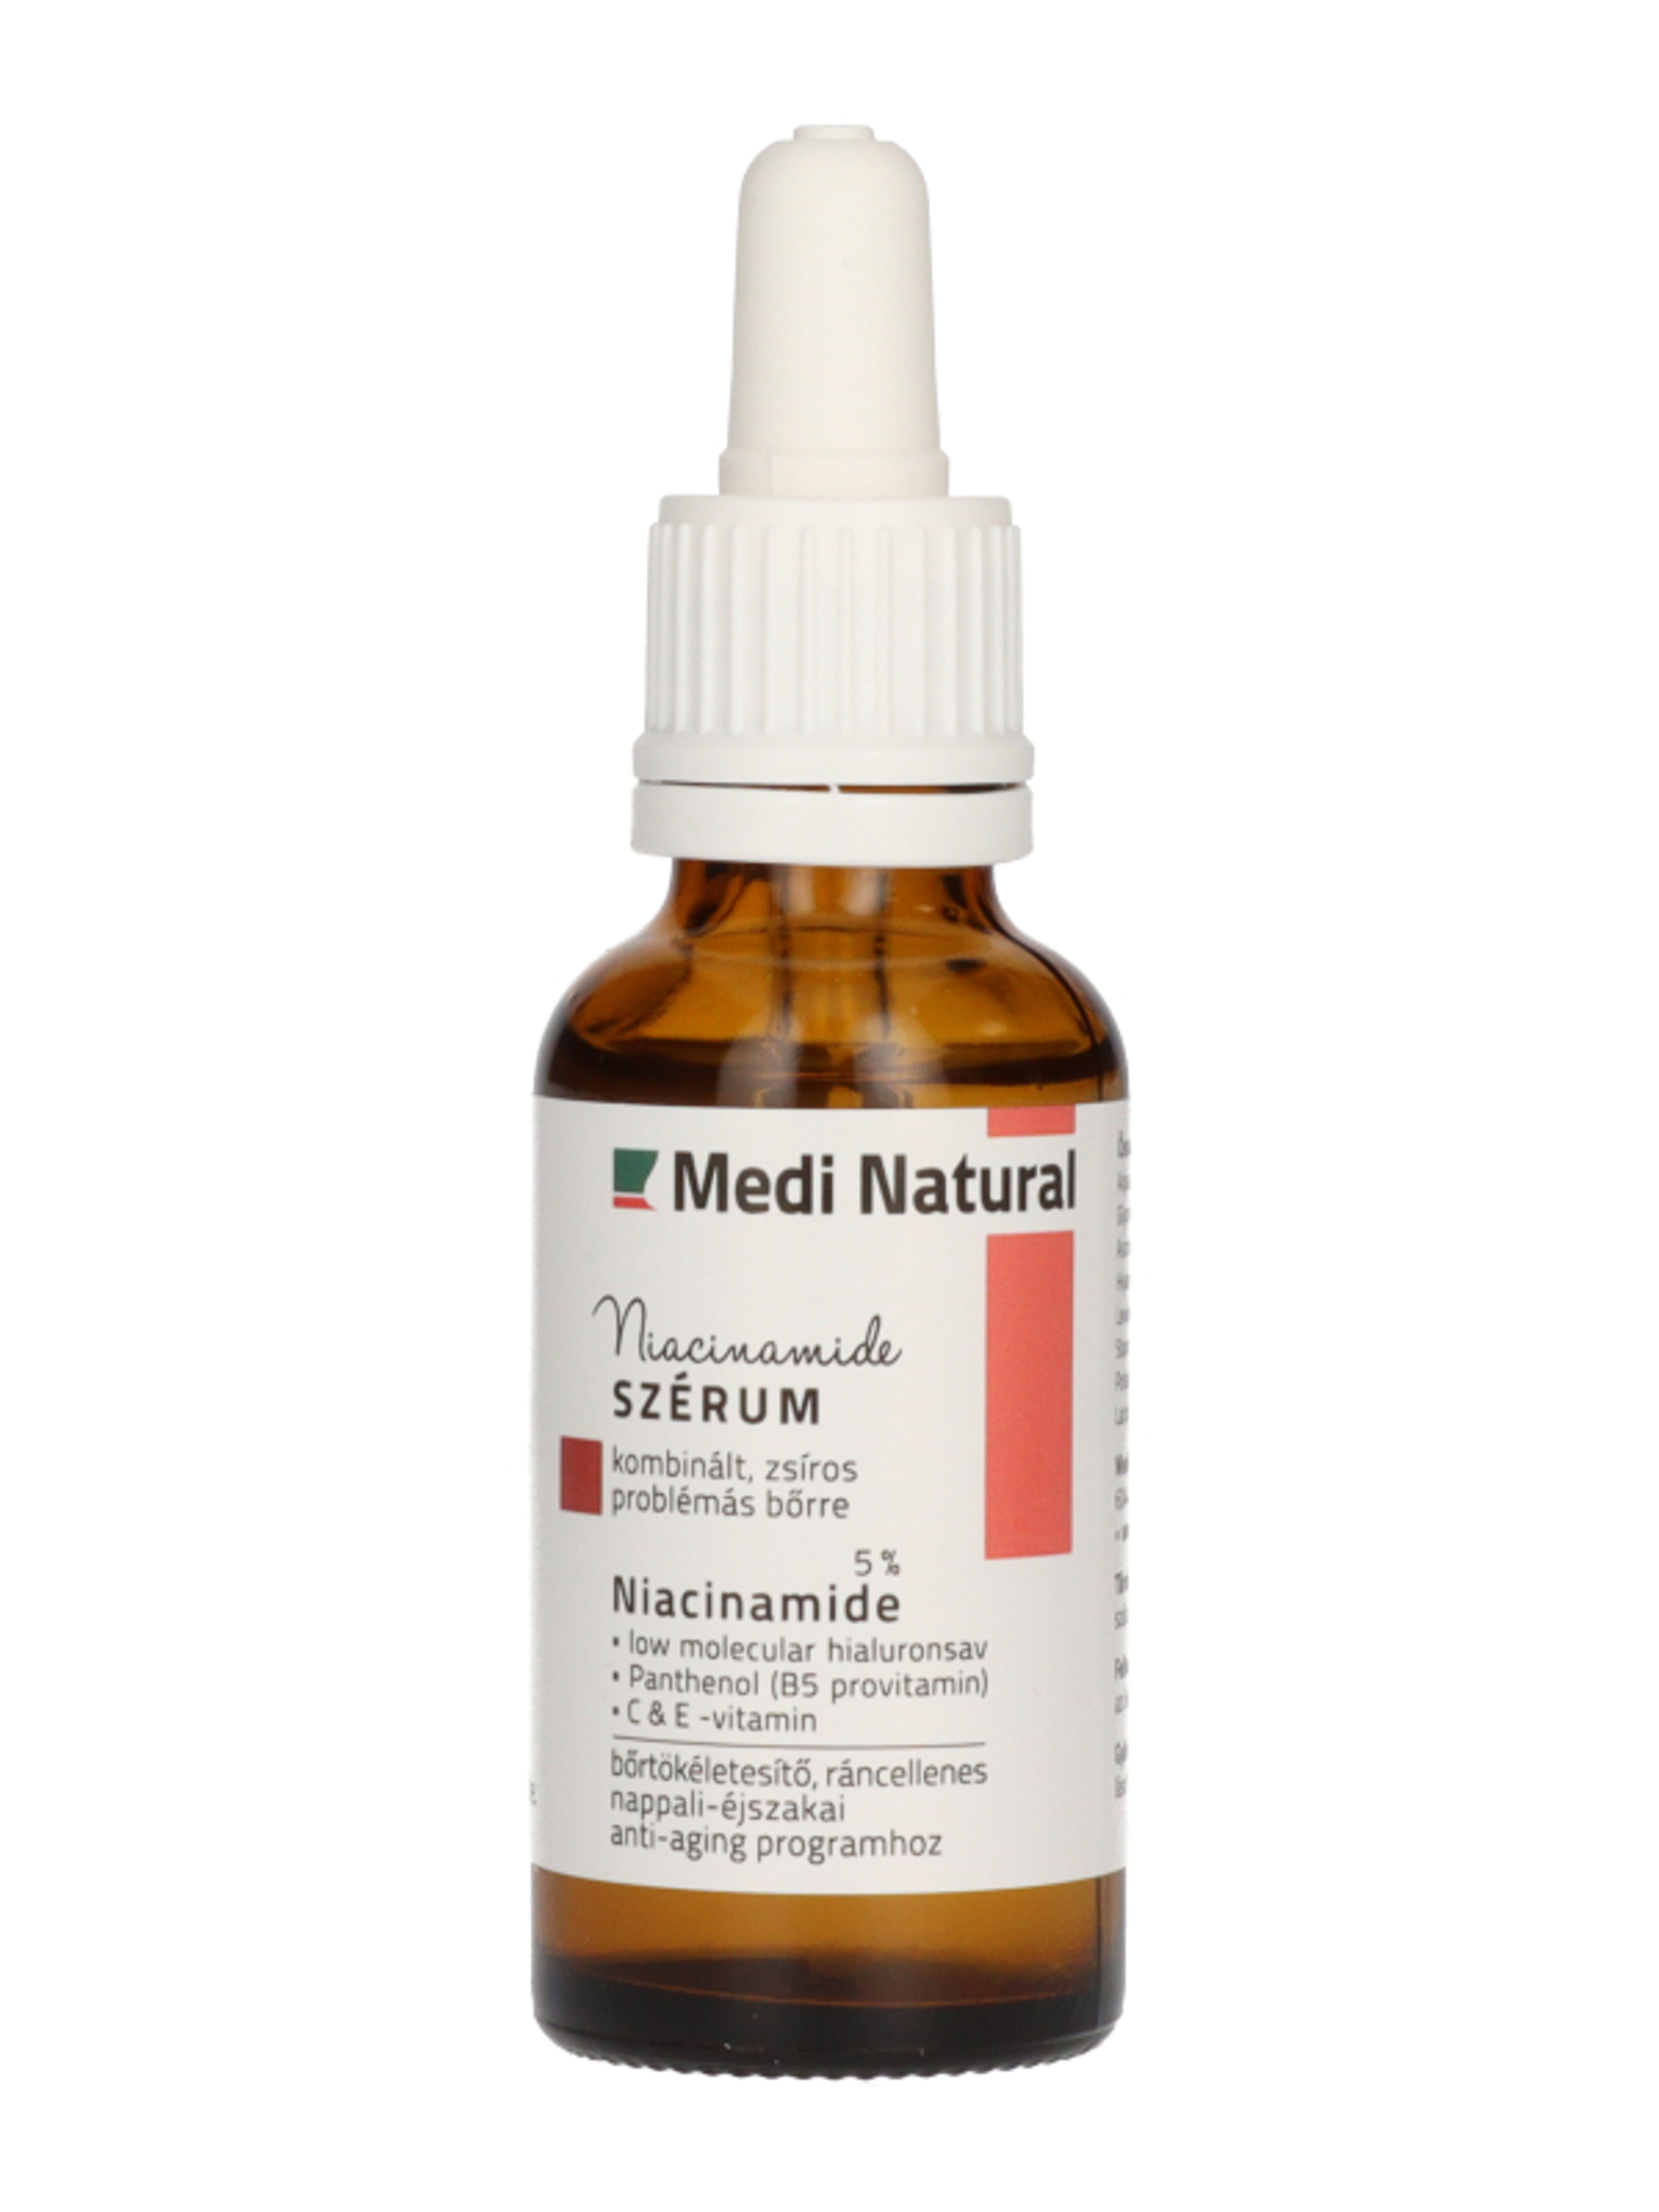 Medi Natural Niacinamid 5% szérum - 30 ml-3